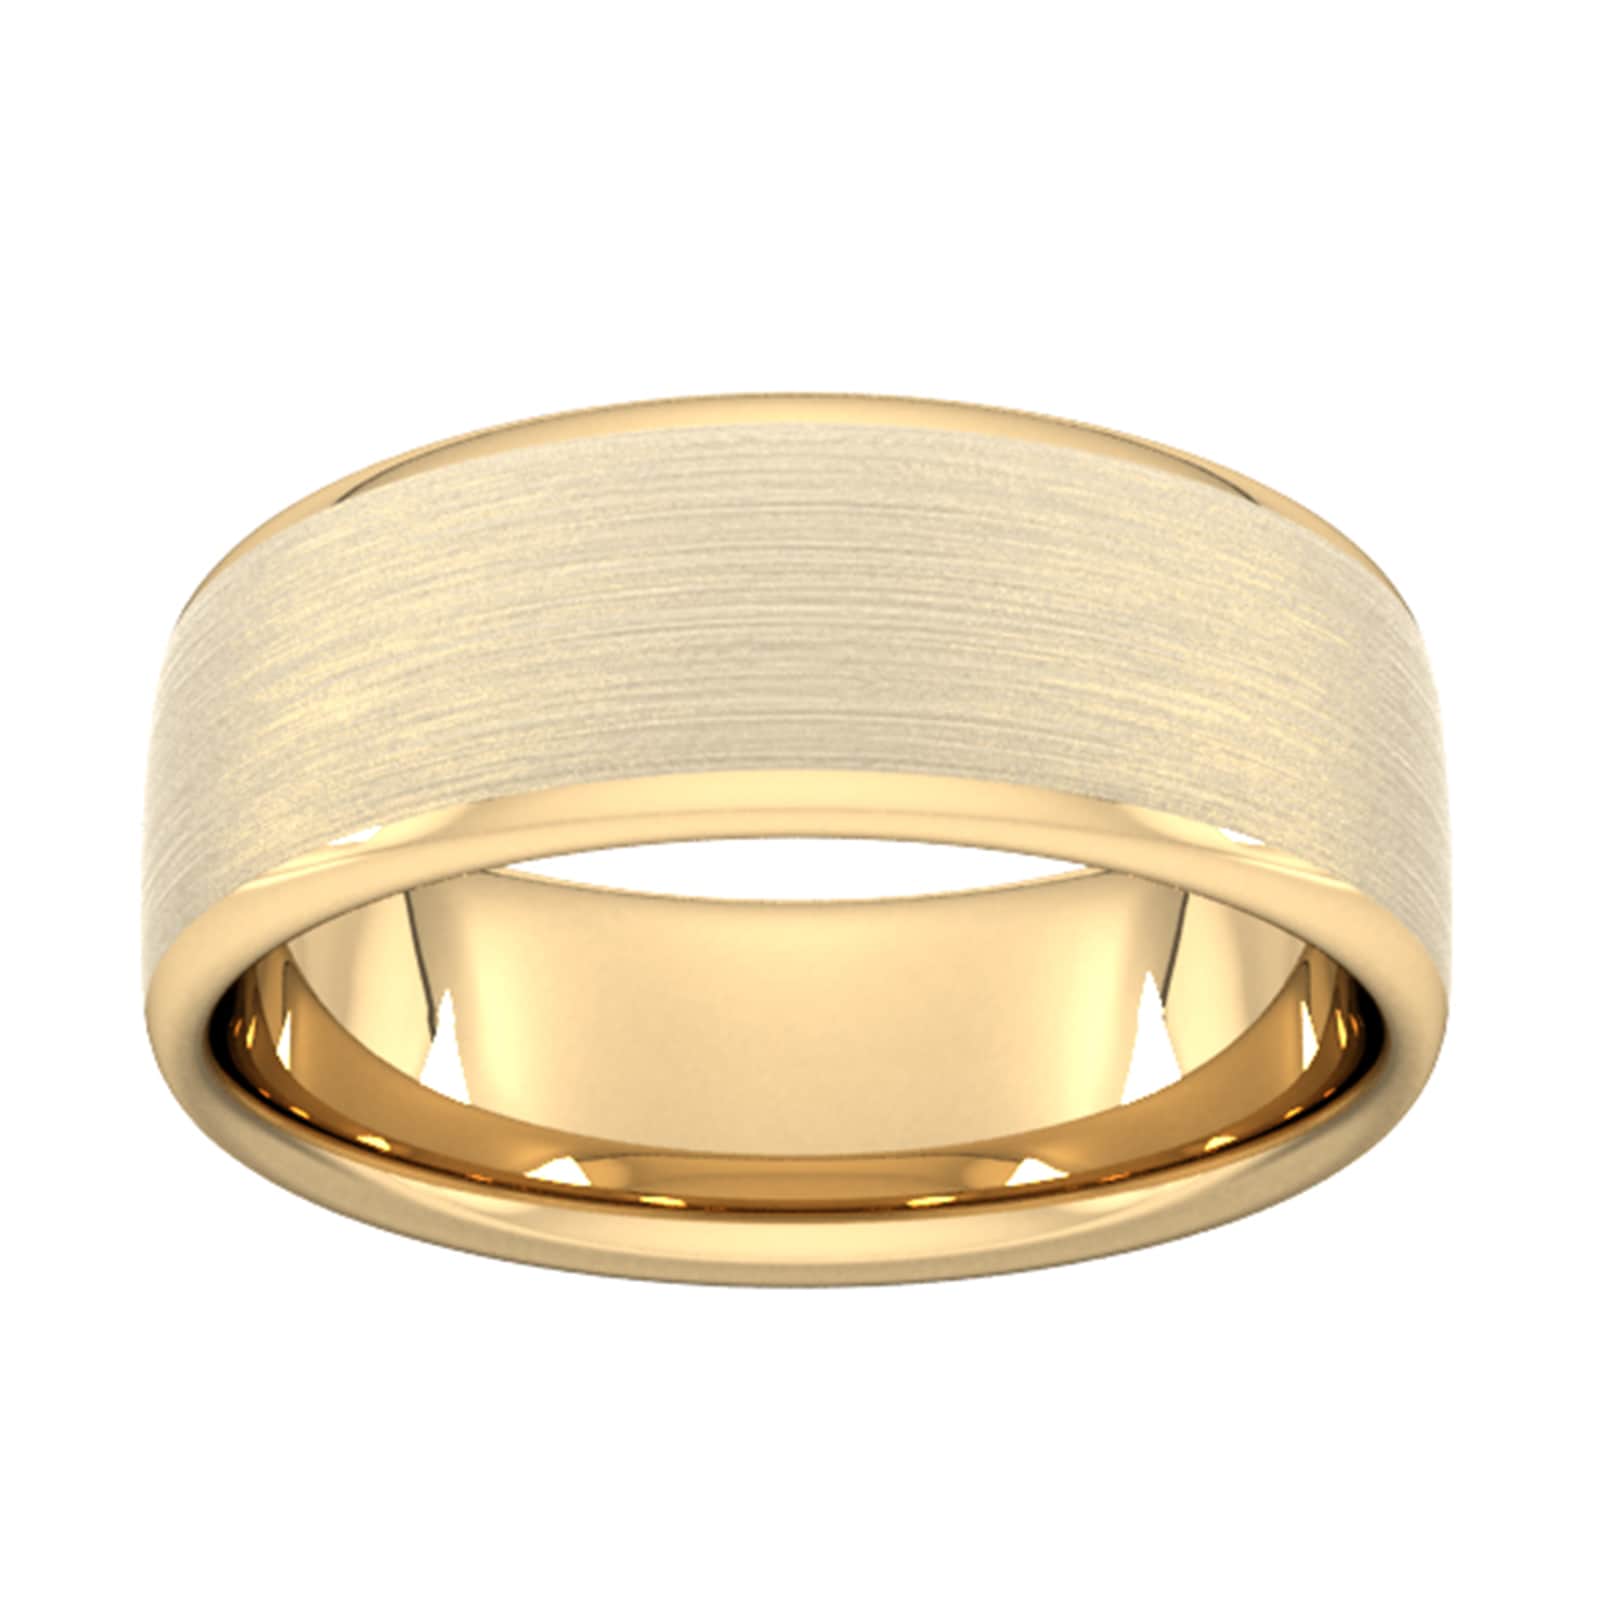 8mm D Shape Standard Matt Finished Wedding Ring In 18 Carat Yellow Gold - Ring Size G